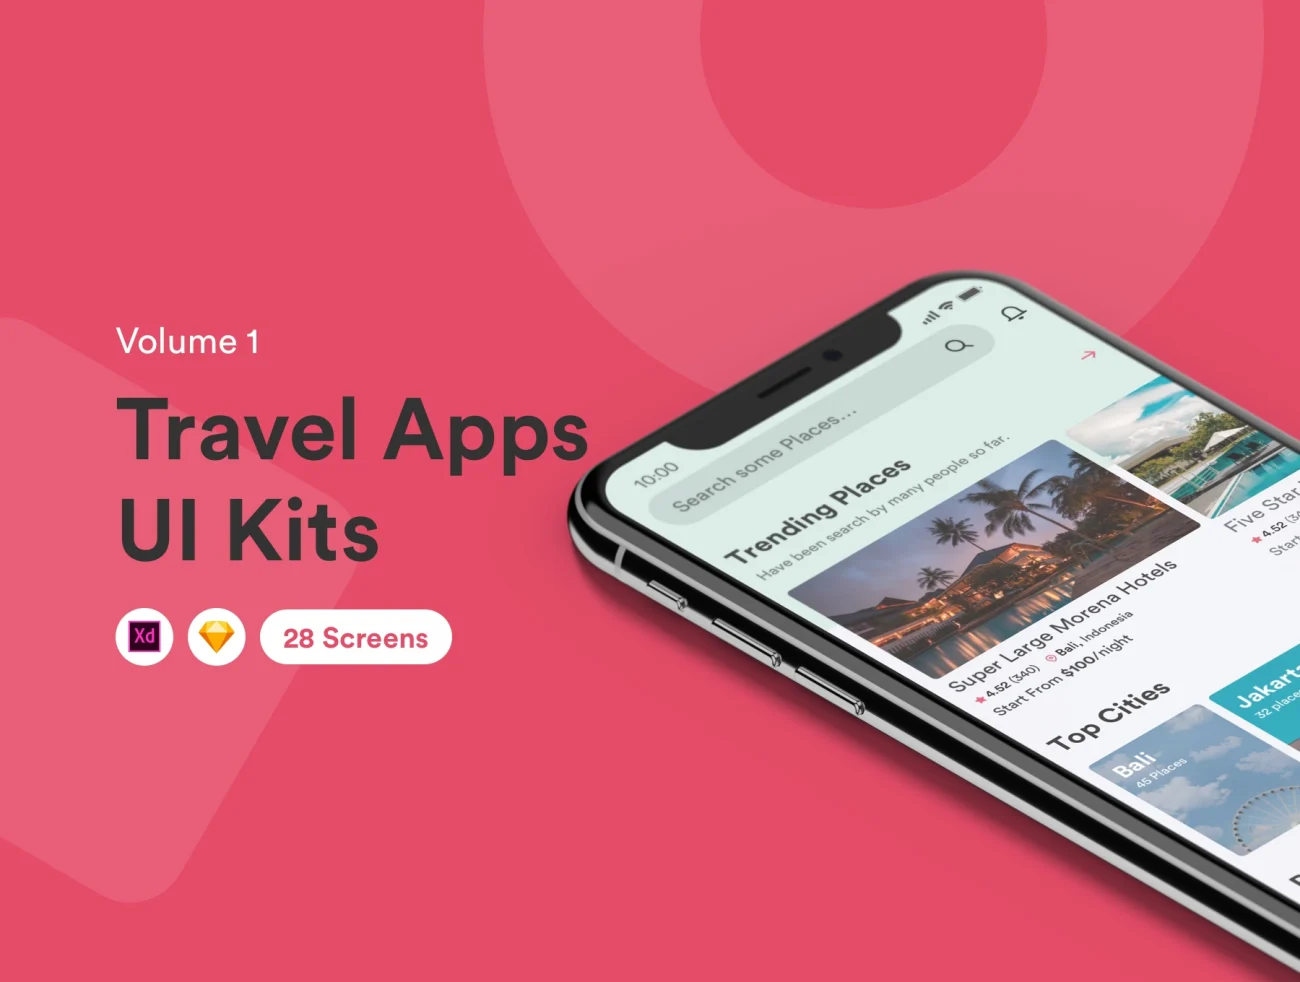 Travel Apps UI Kits 旅游应用程序用户界面套件-UI/UX-到位啦UI